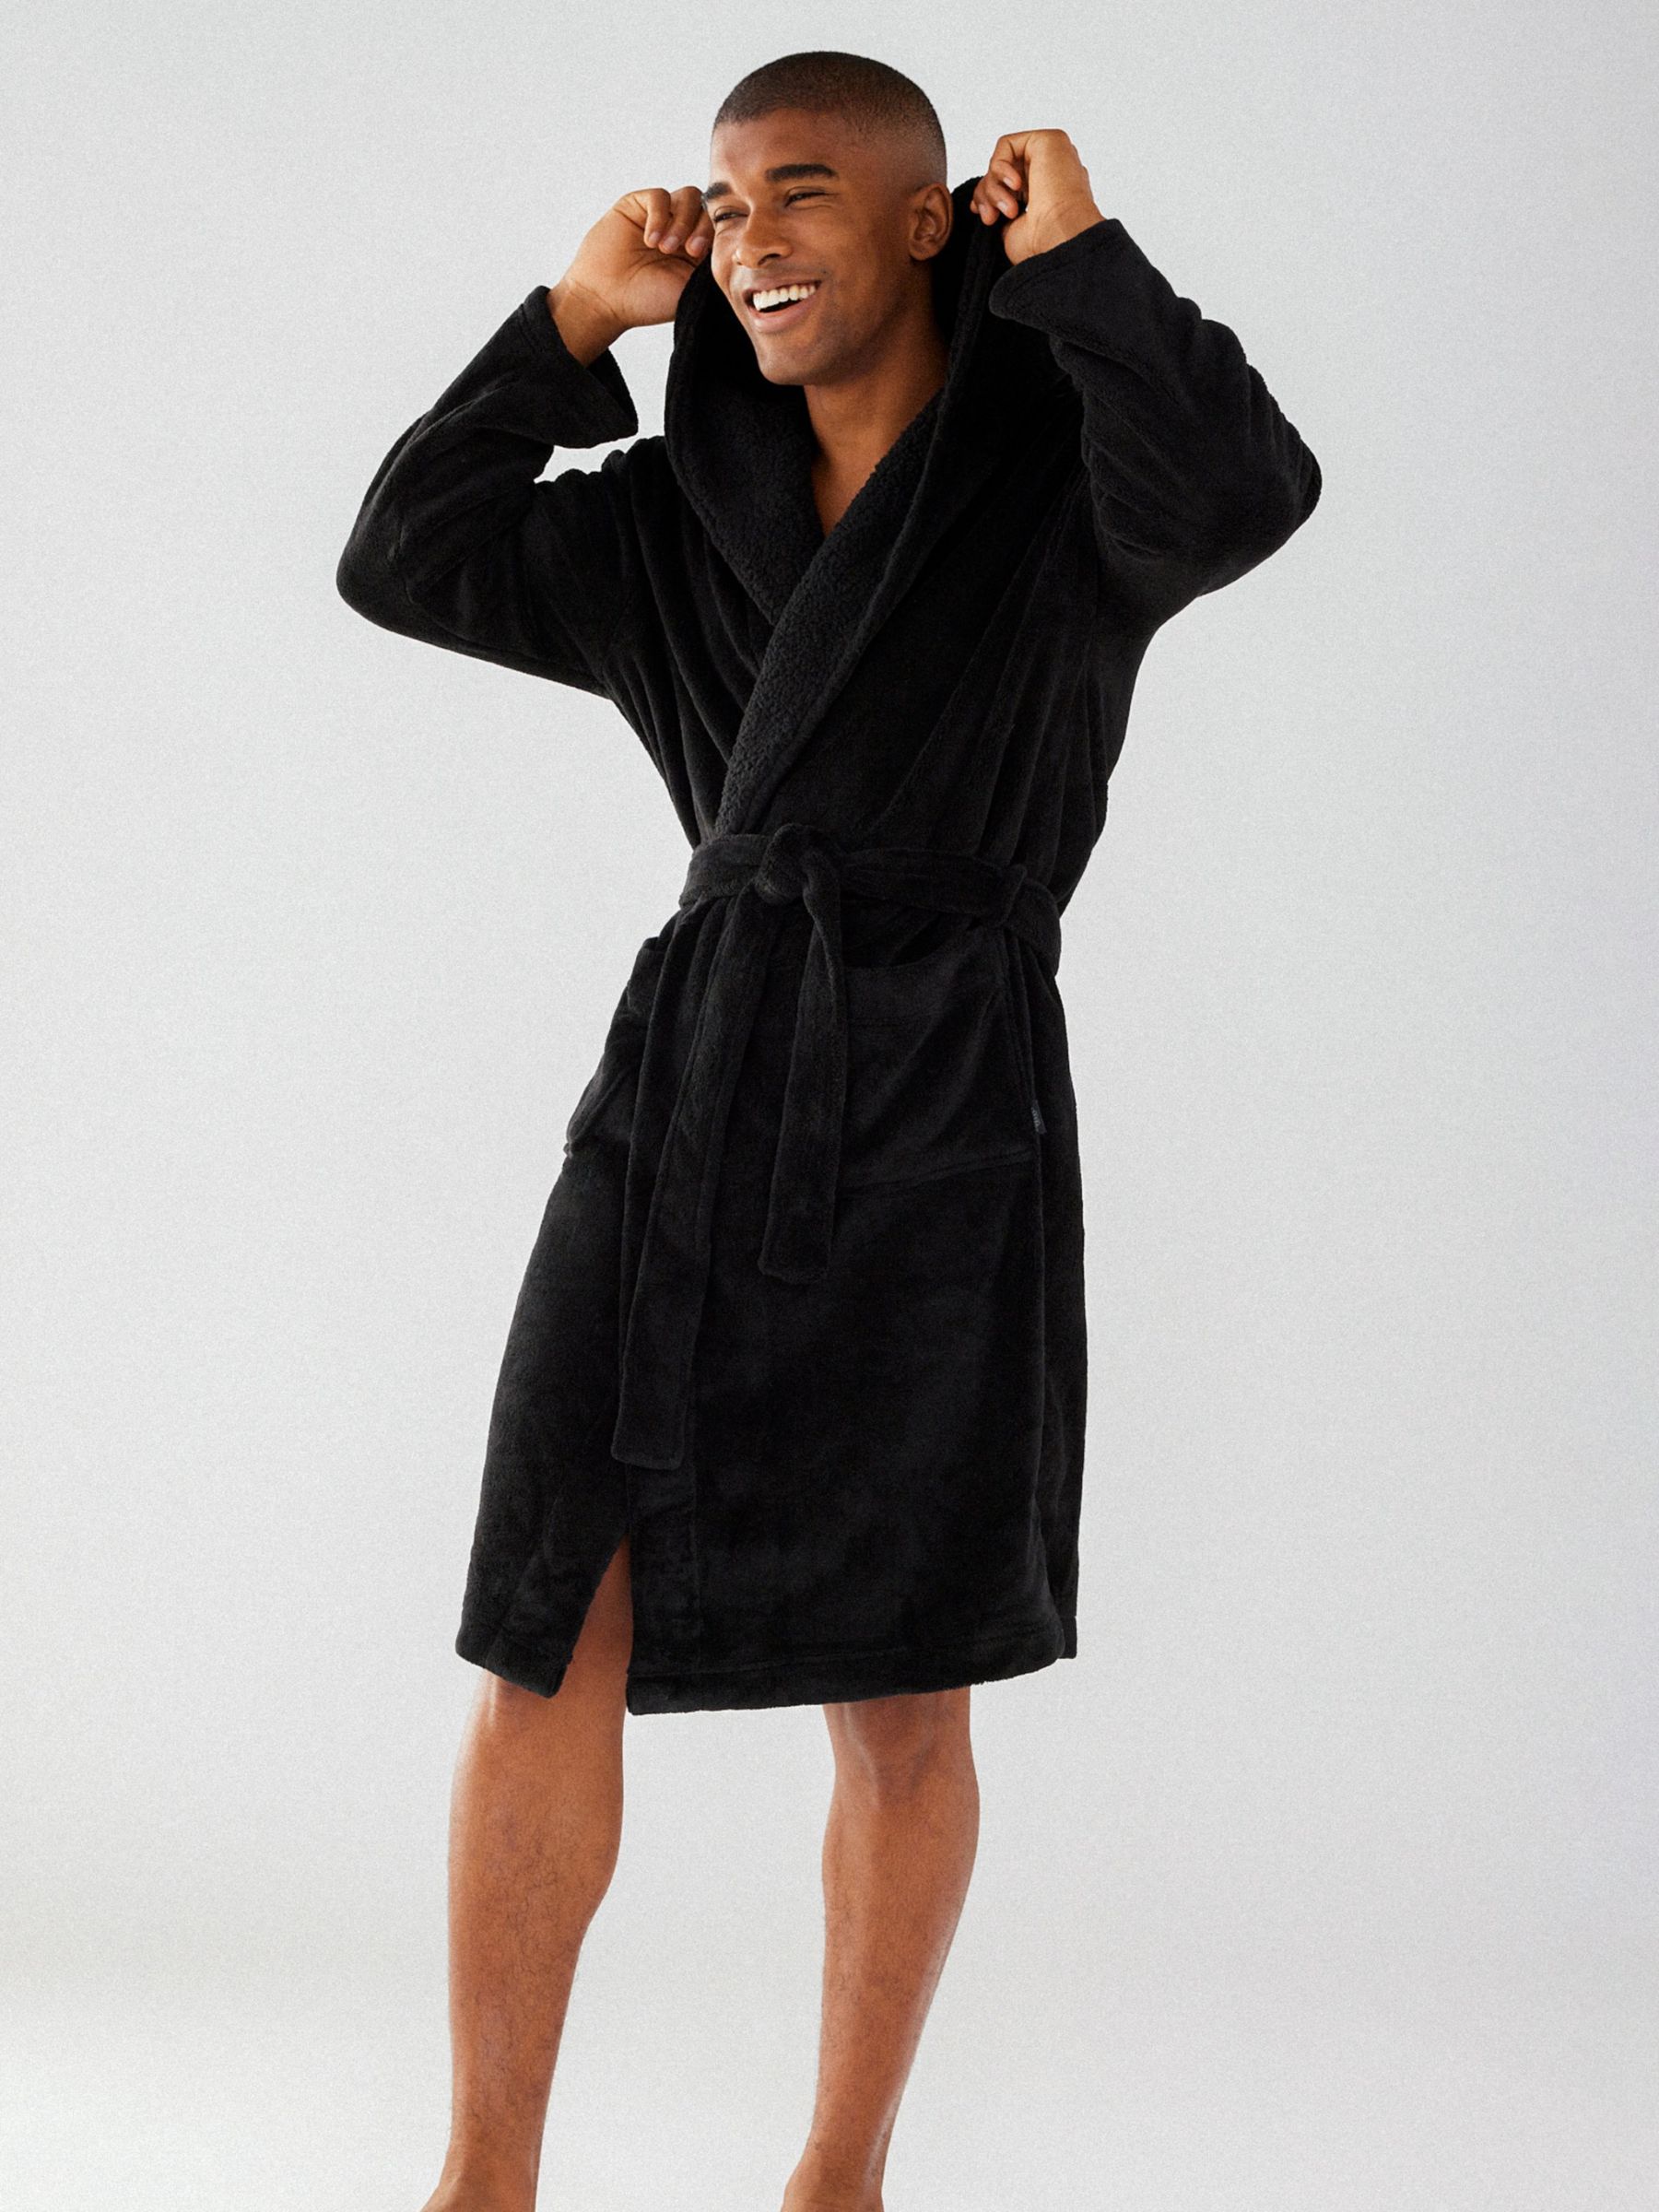 Chelsea Peers Fluffy Hooded Dressing Gown, Black at John Lewis & Partners